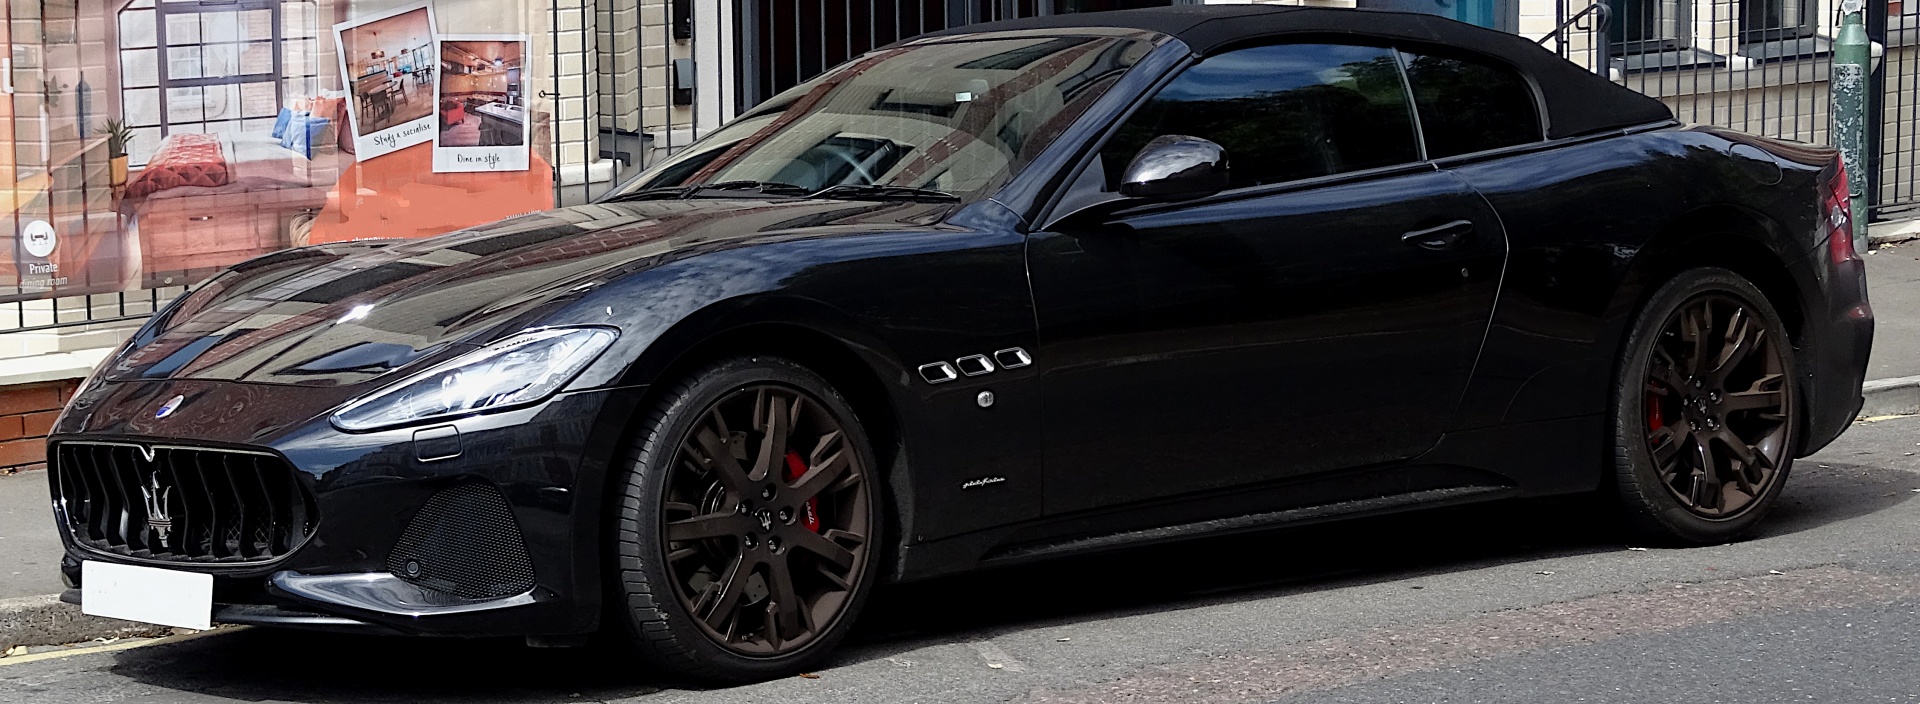 Black Maserati Coupe Car